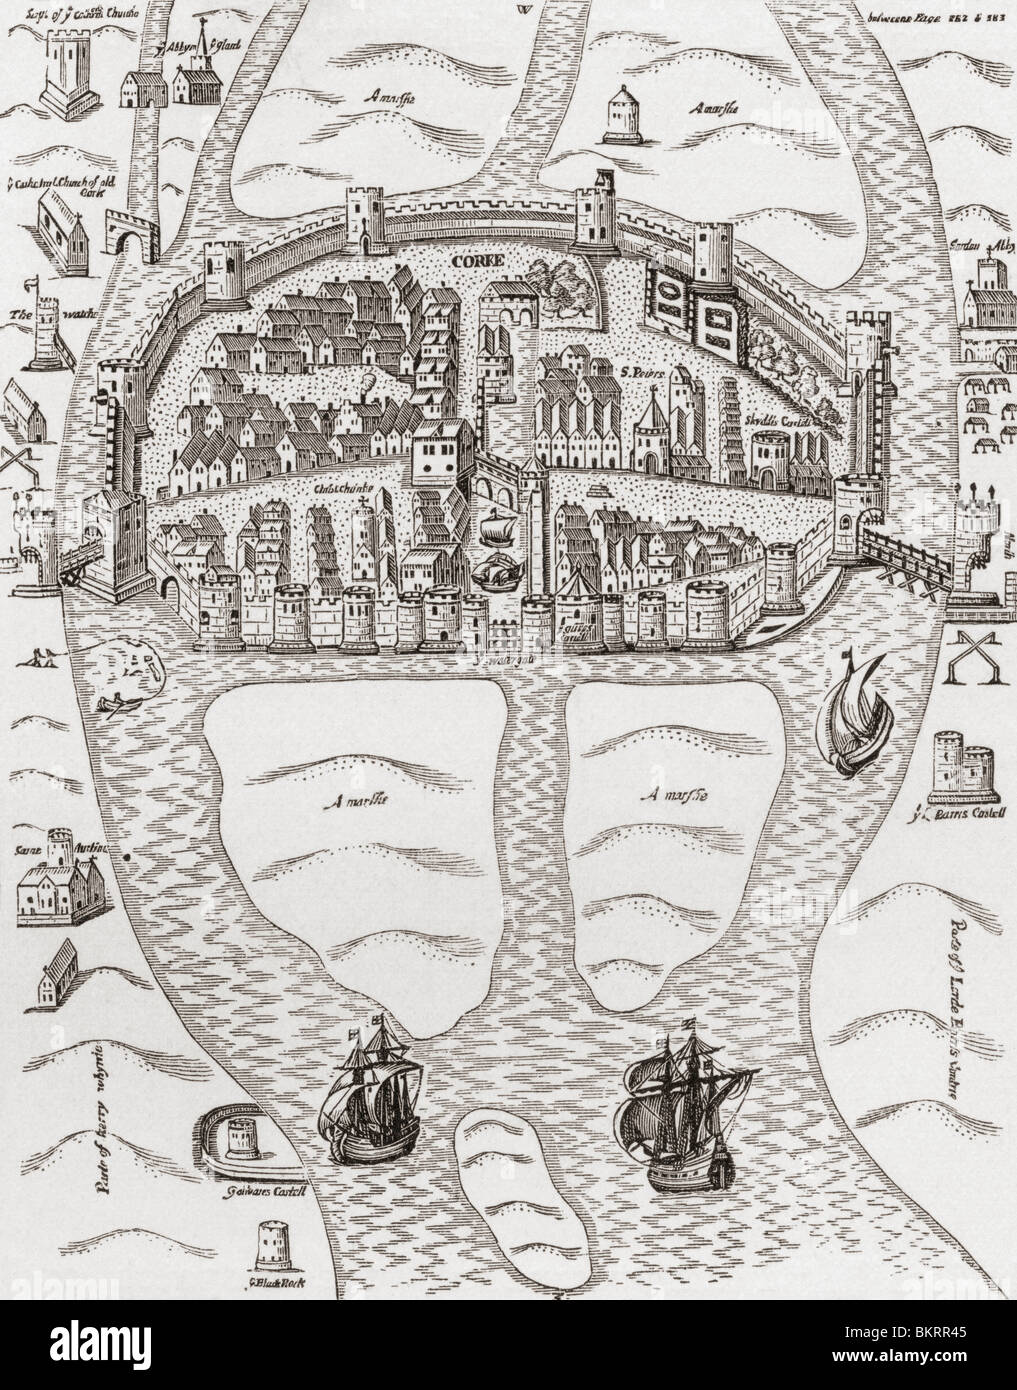 Cork, County Cork, Ireland in 1633. Stock Photo